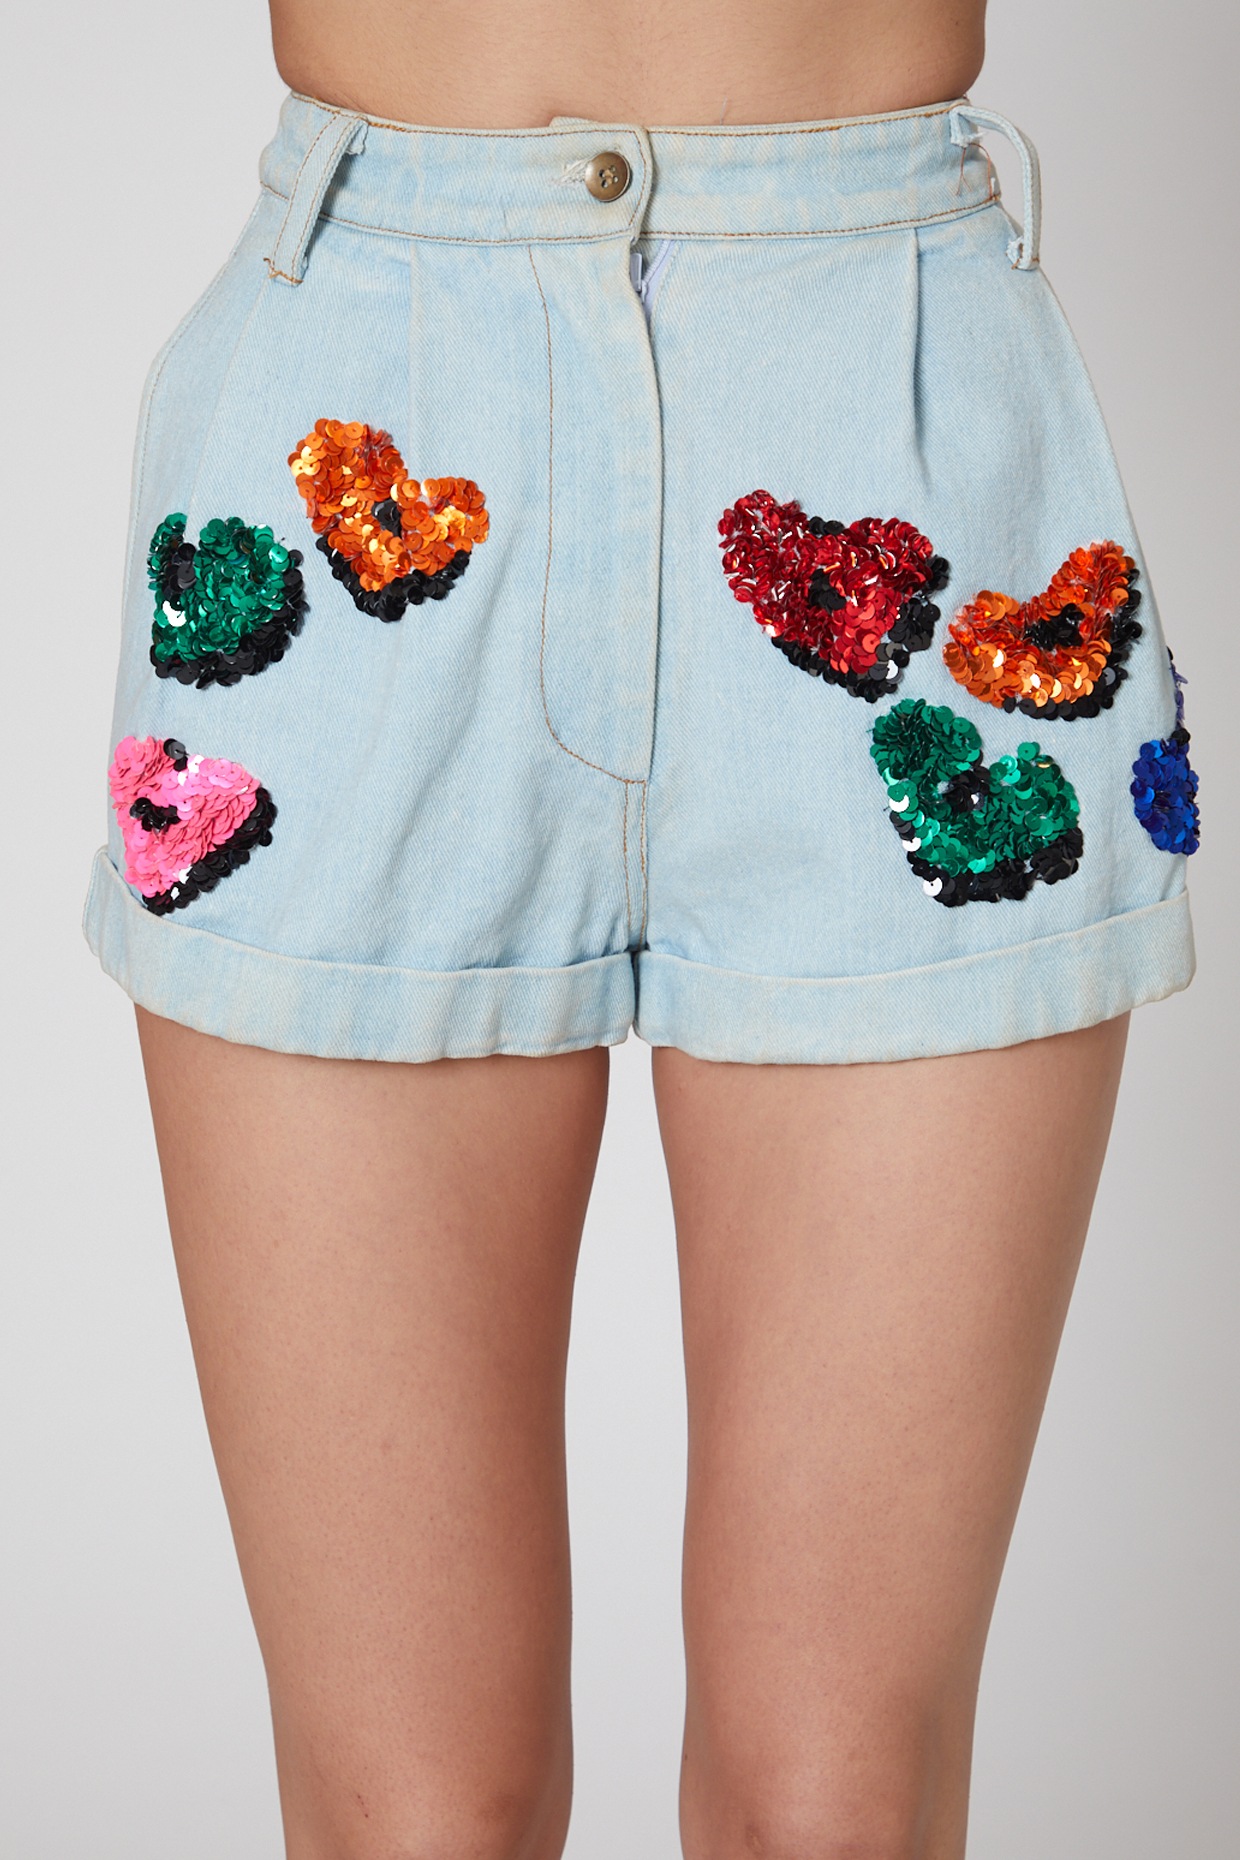 Custom Painted and Embellished Denim Shorts Sonoma Cut off Jeans Sz 14  Wearable Art Hippie Boho Design Inv379 - Etsy